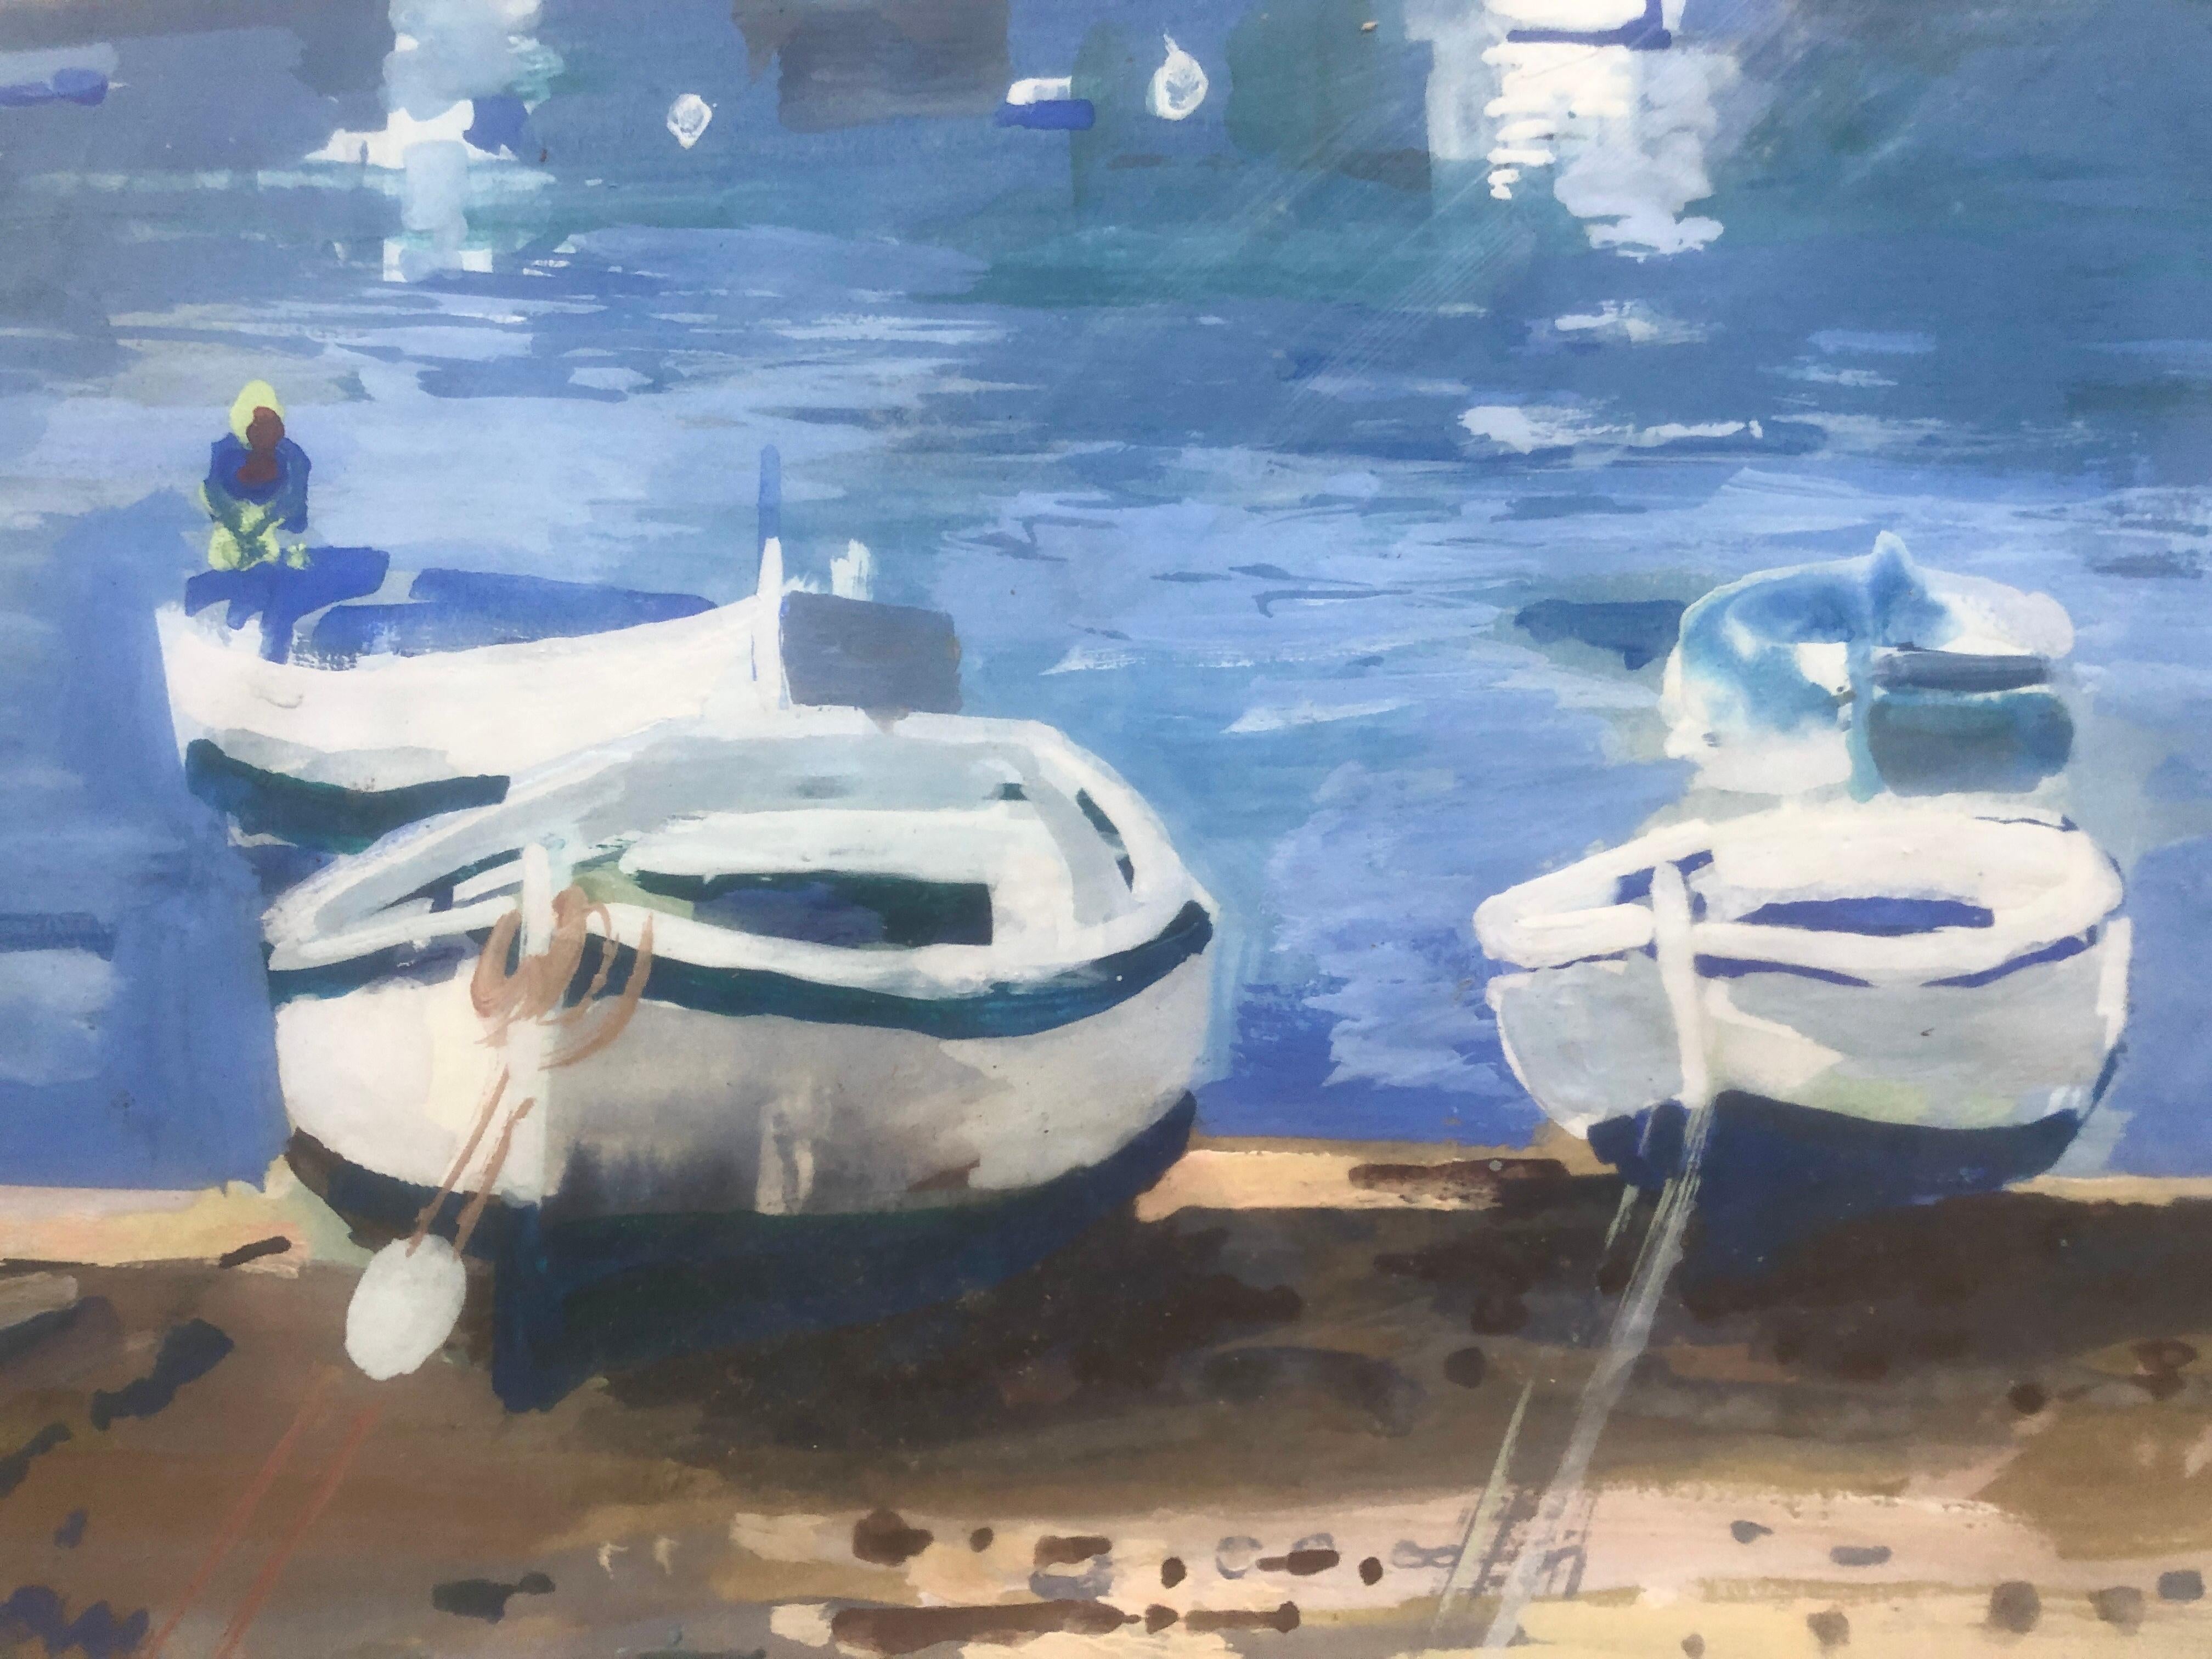 Rafael Duran Benet (1931-2015) - Cadaques - Aquarell
Aquarell Abmessungen 31x47 cm.
Rahmenmaße 47x63 cm.

Rafael Duran Benet (Terrassa, 1931 - Barcelona, 2015) ist ein katalanischer Maler, Neffe des Malers Rafael Benet. Er ist ein Schüler von Manolo